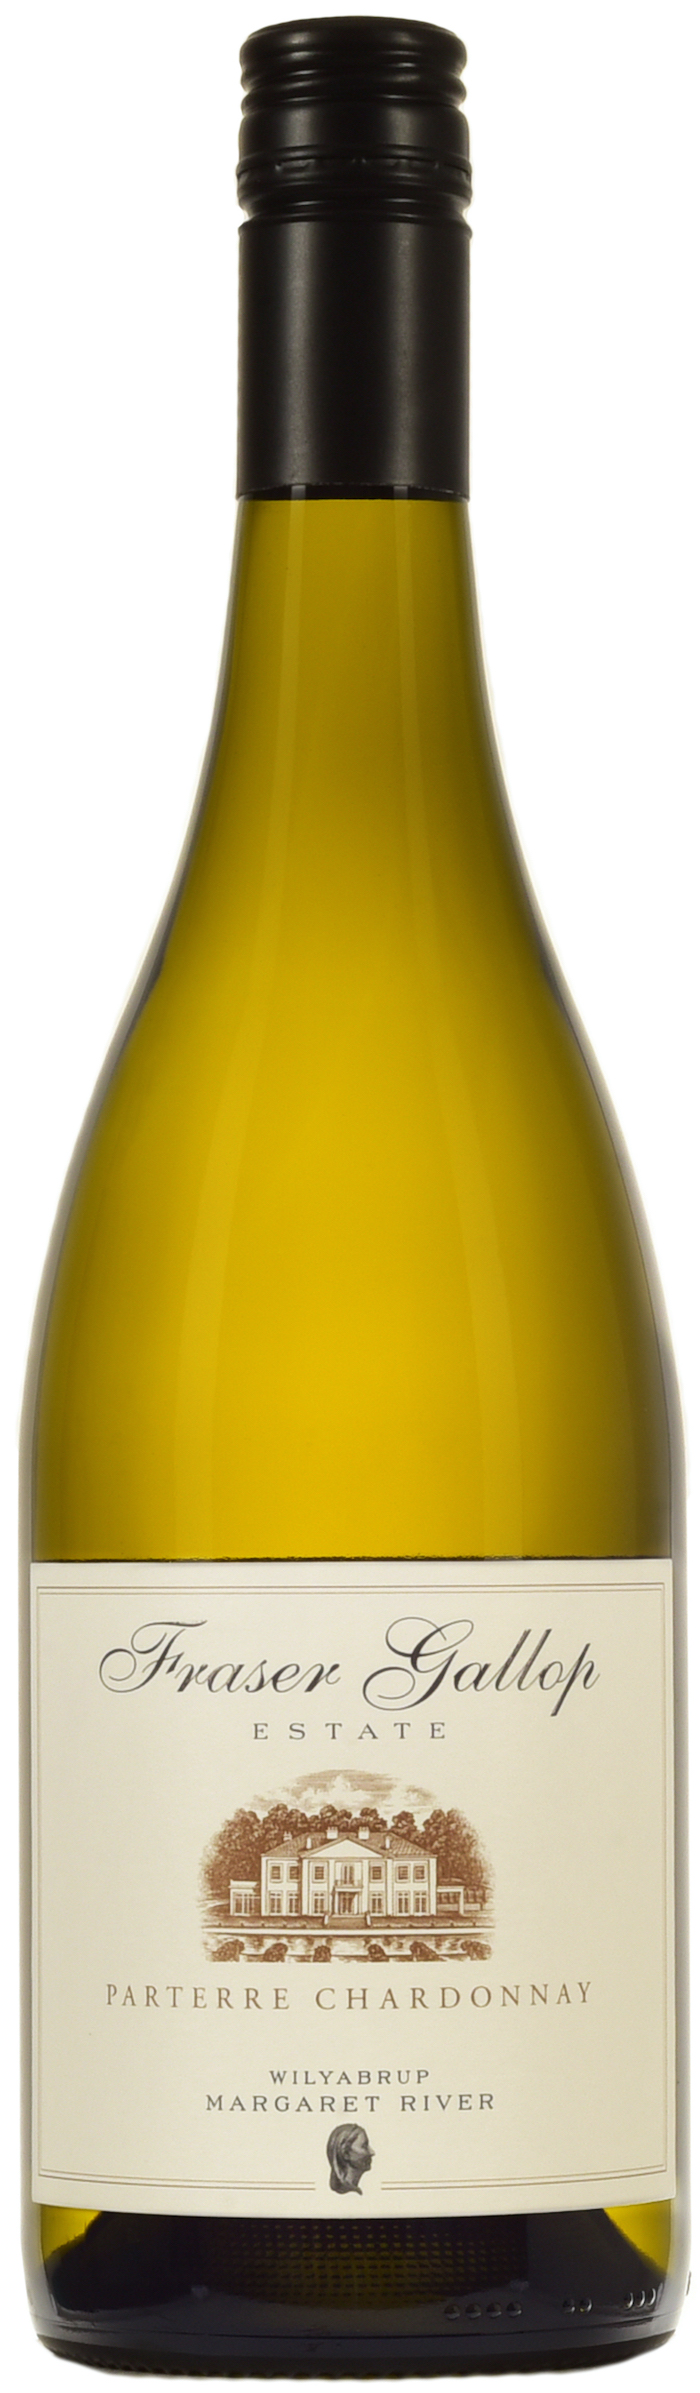 Wine Bottle for Fraser Gallop Parterre Chardonnay